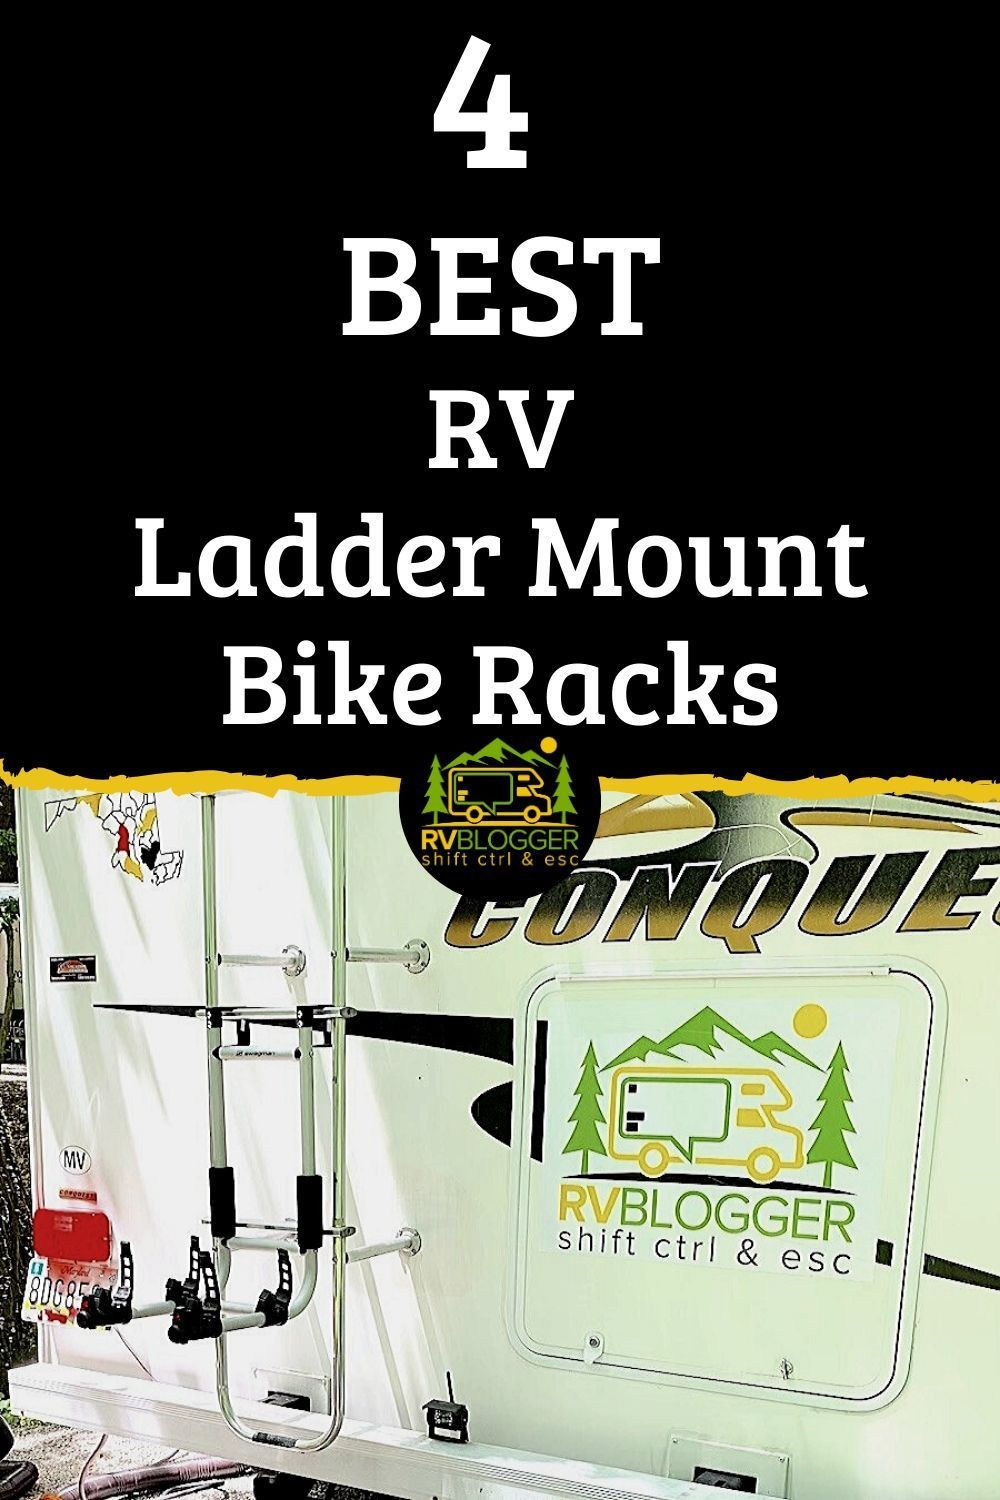 DIY Rv Ladder Bike Rack
 4 Best RV Ladder Mount Bike Racks and Our Top Pick